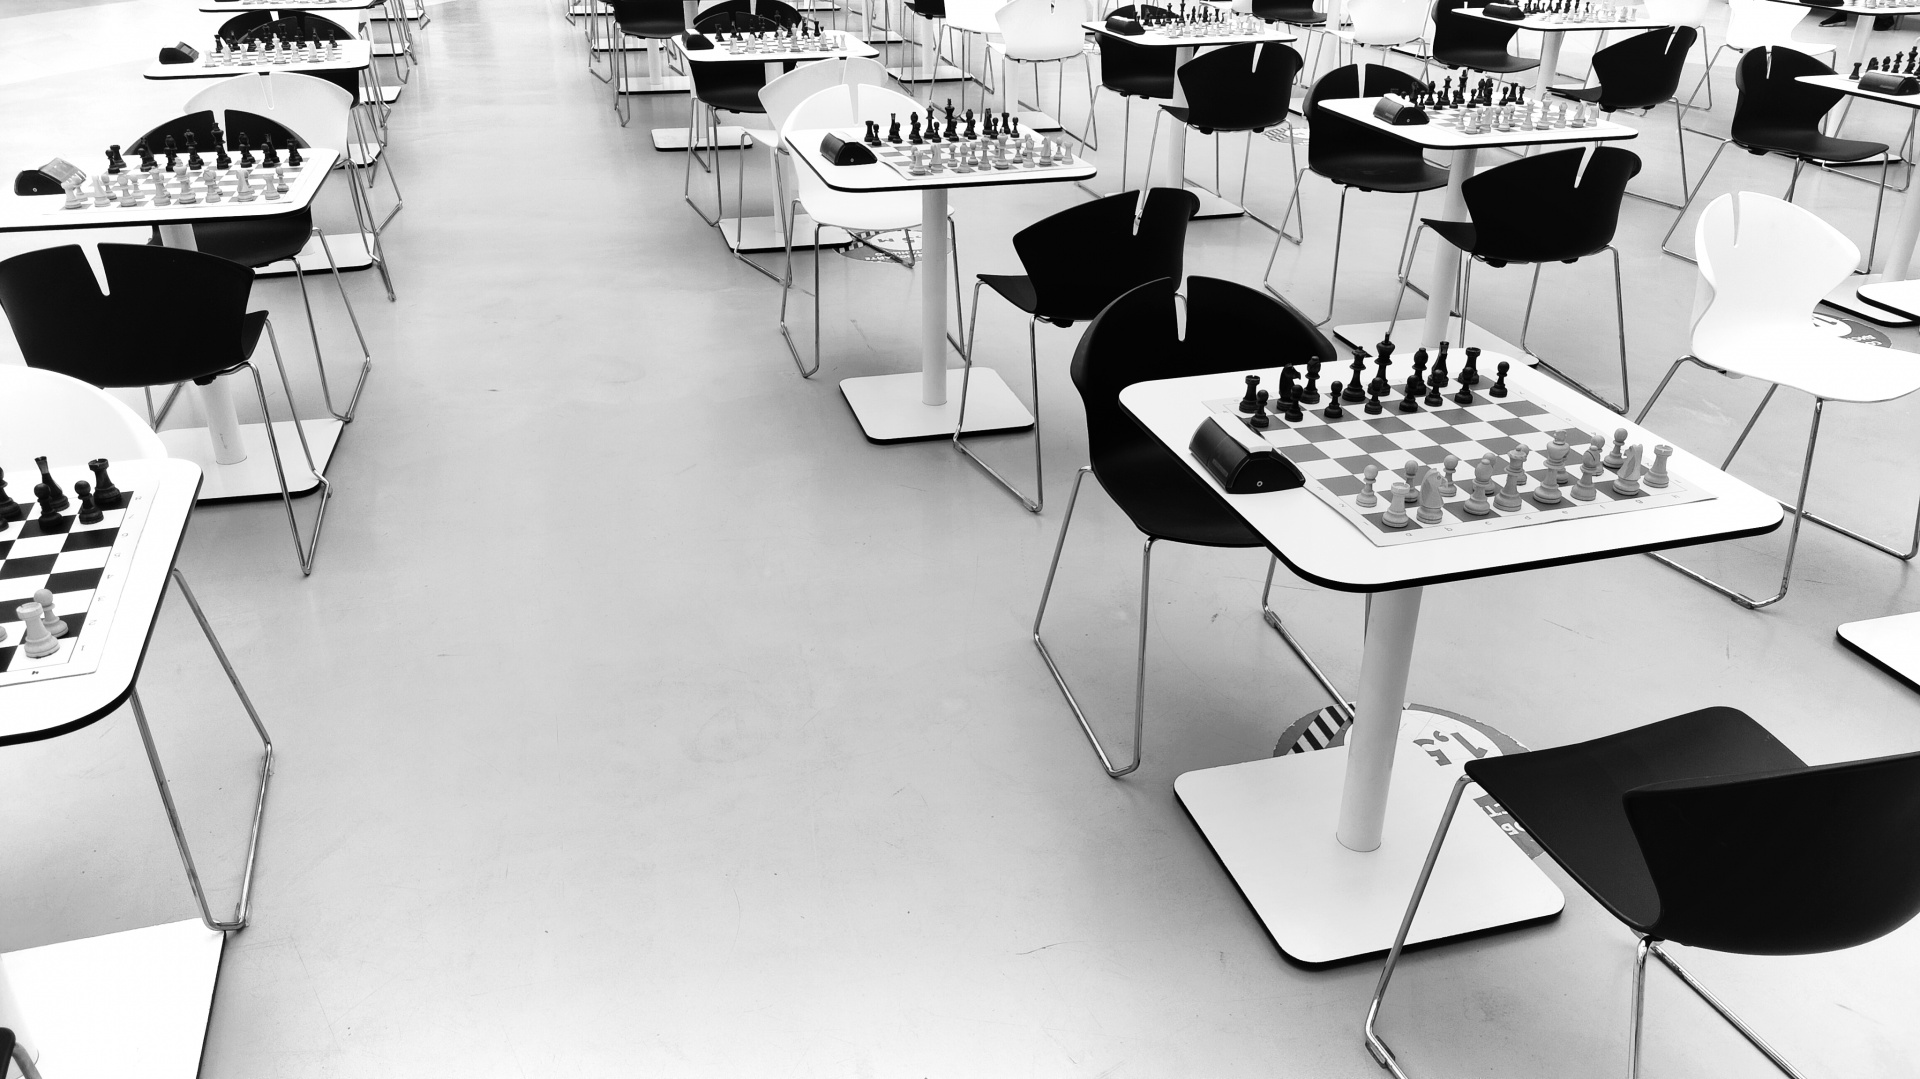 Chess, Chess Board, Chess Club